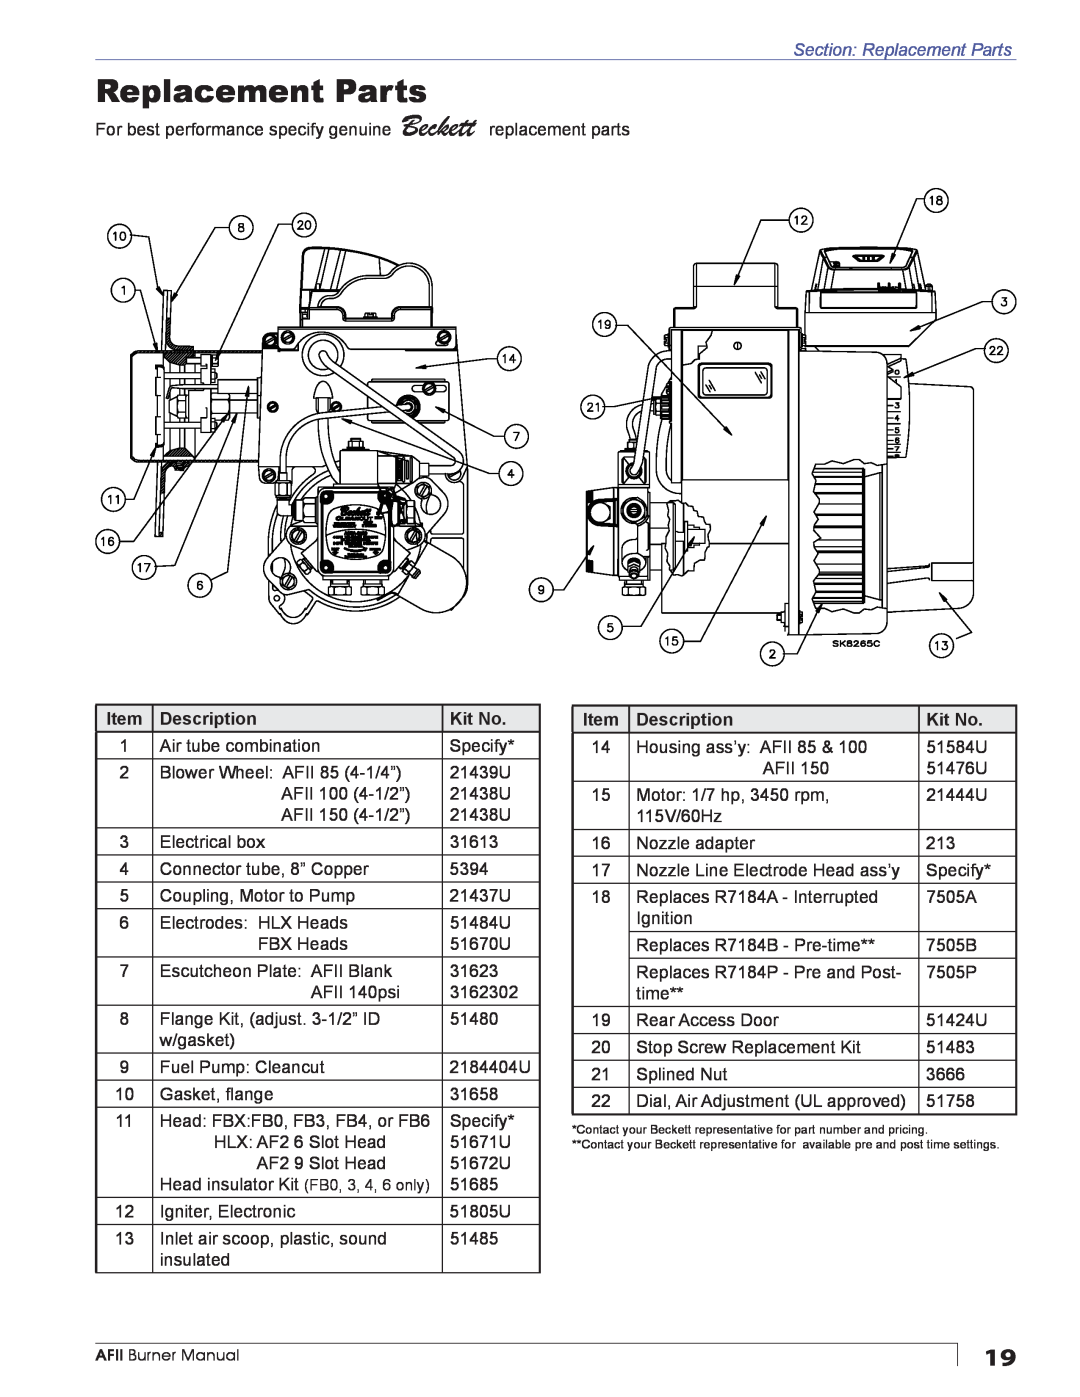 Beckett AFII manual Section Replacement Parts, Description, Kit No 